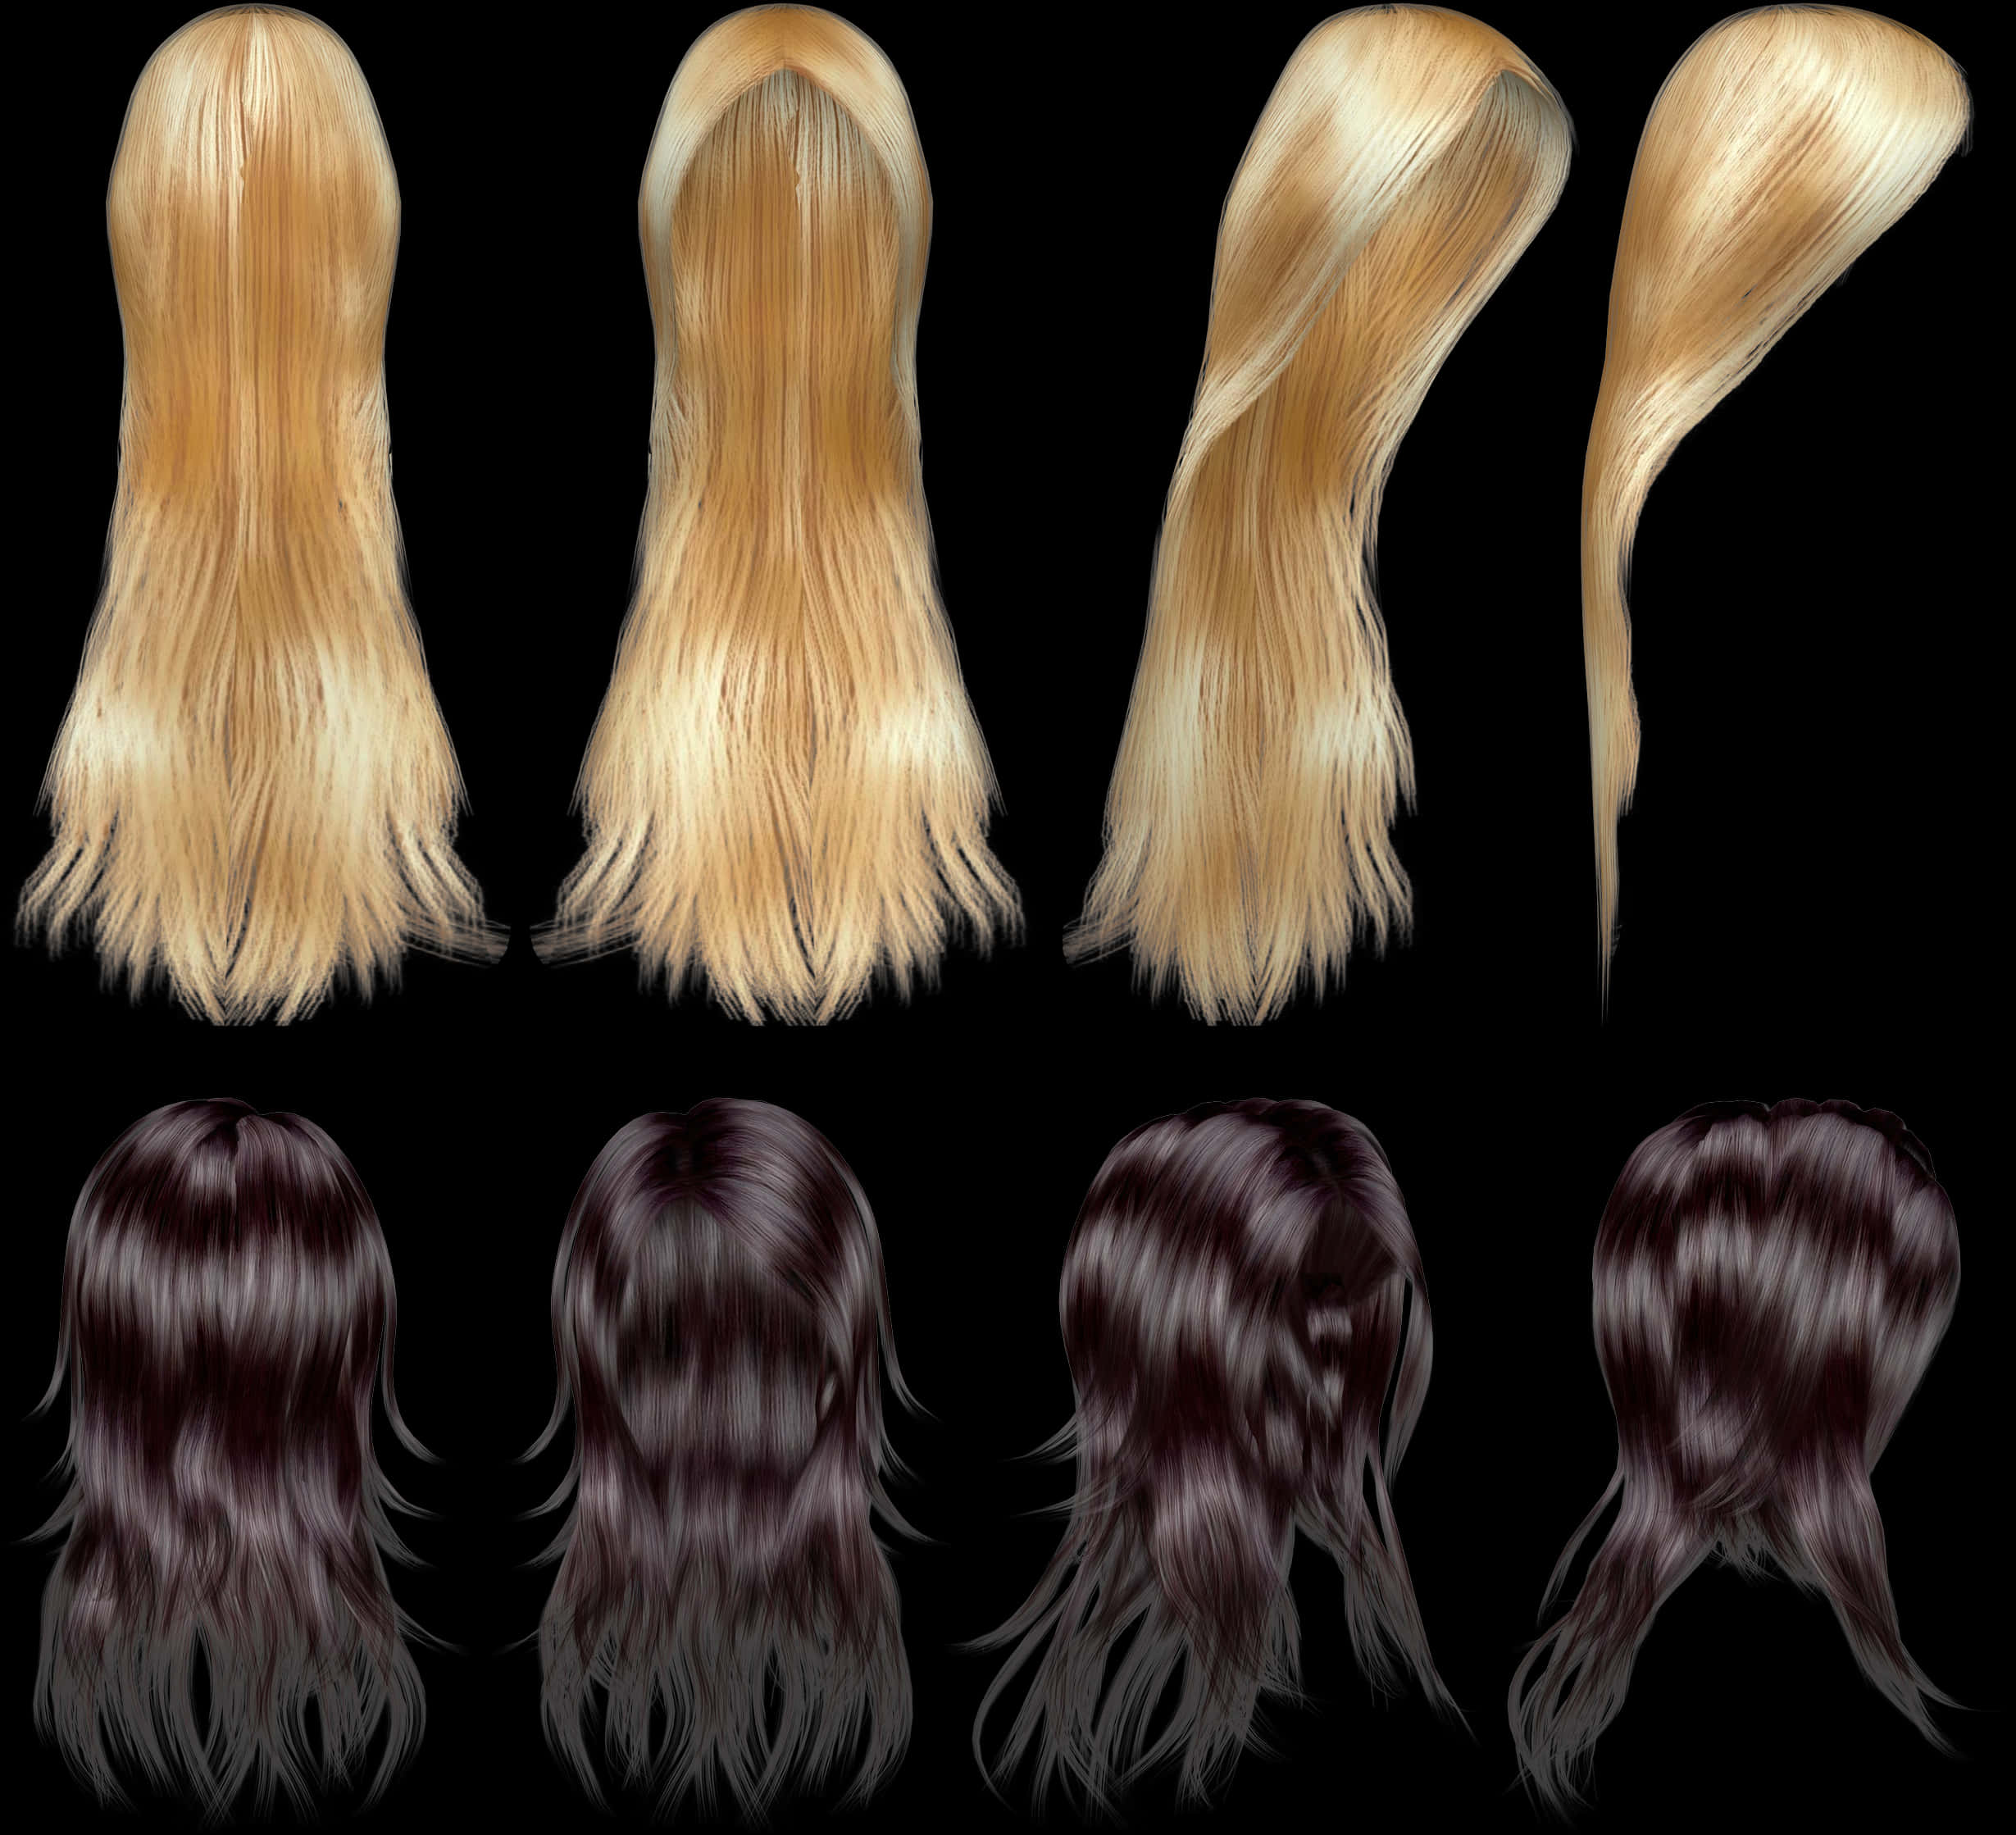 Varietyof Wigs Stylesand Colors